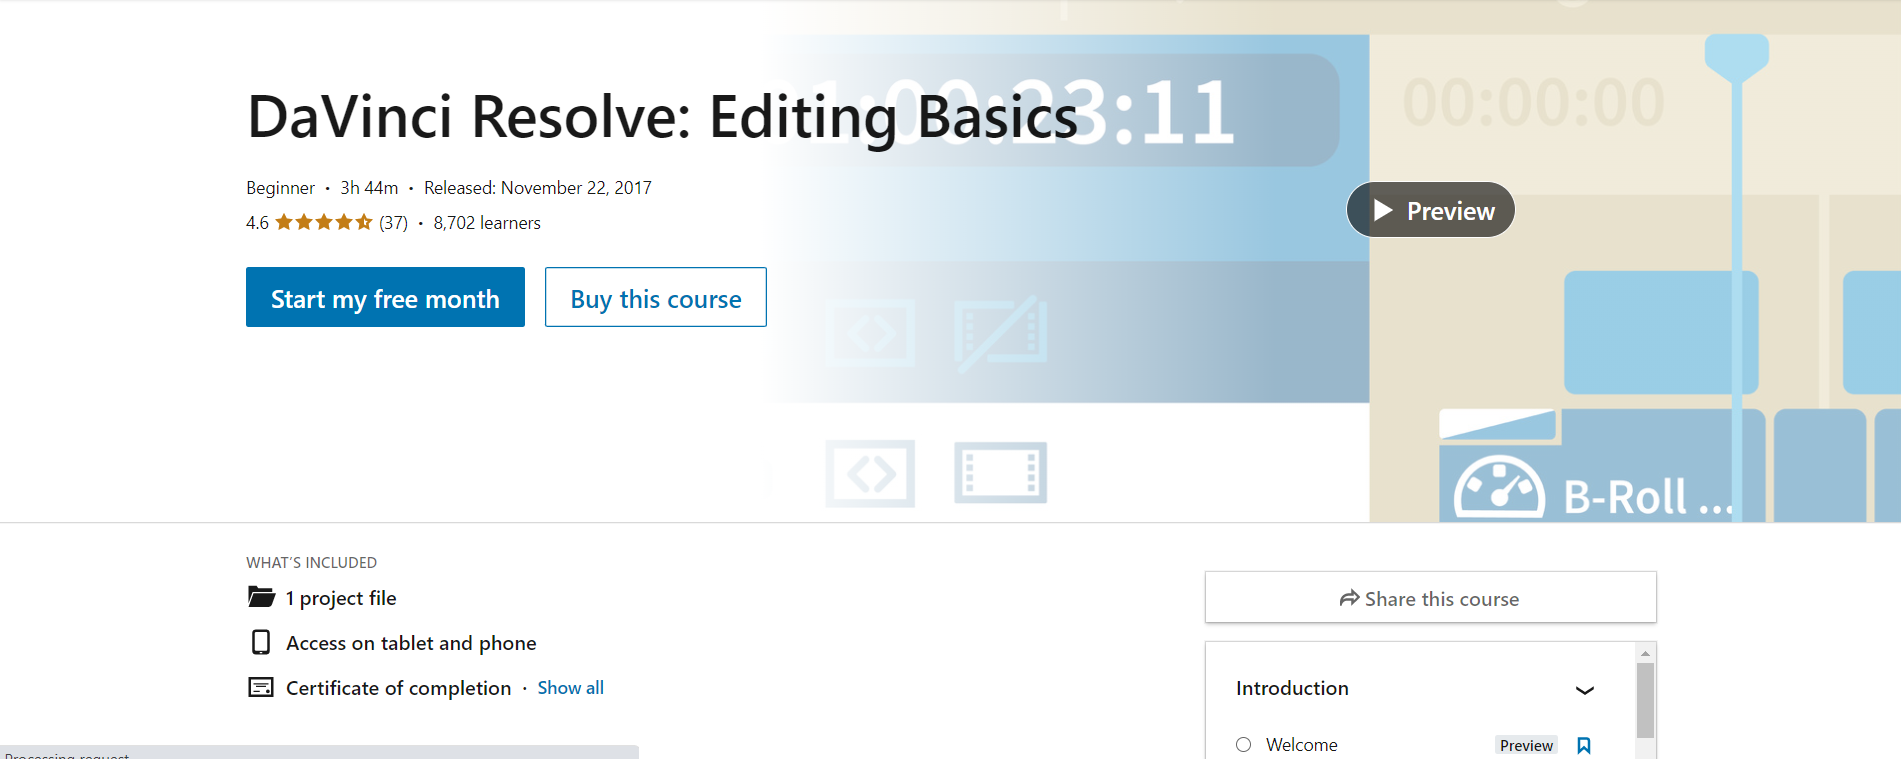 DaVinci Resolve Editing Basics